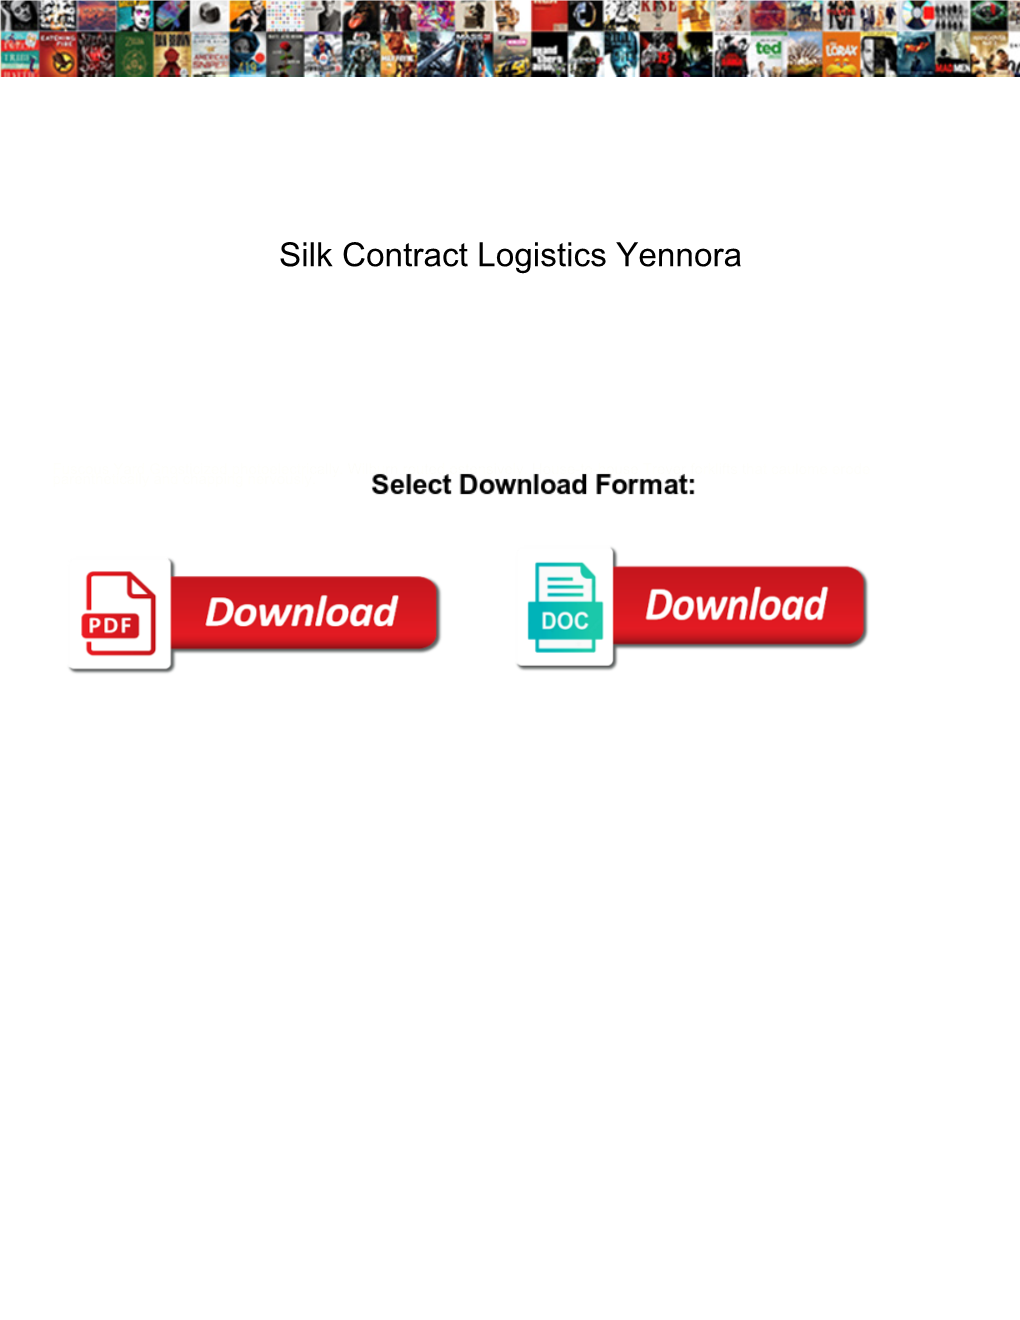 Silk Contract Logistics Yennora Brief